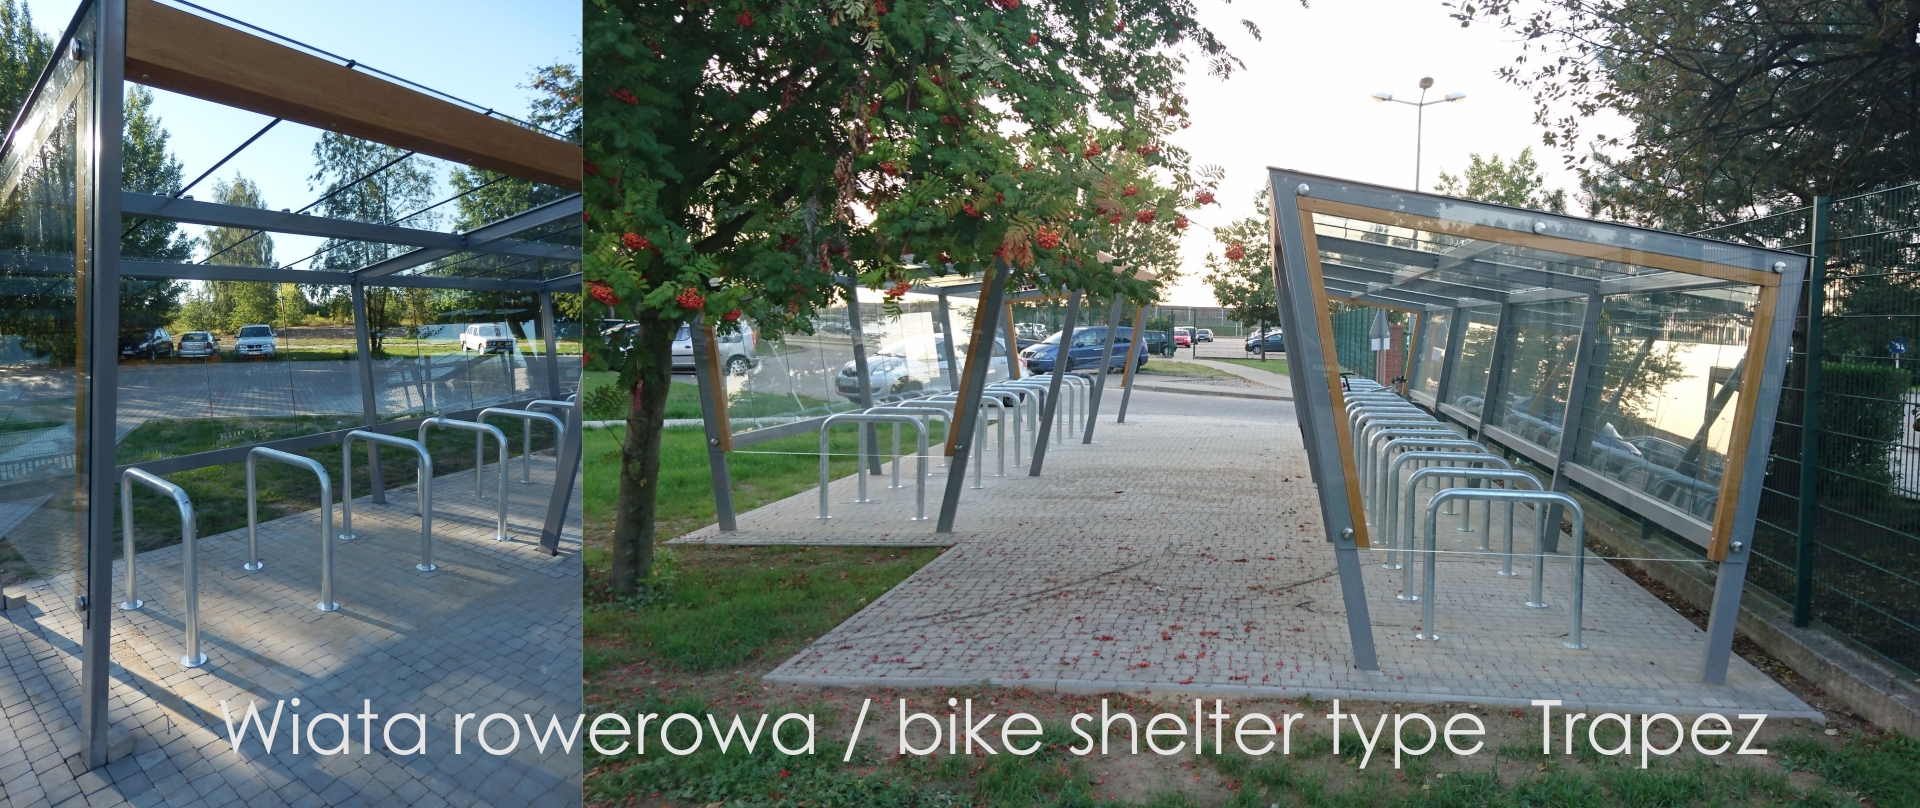 Wiata rowerowa (bike shelter) type Trapez